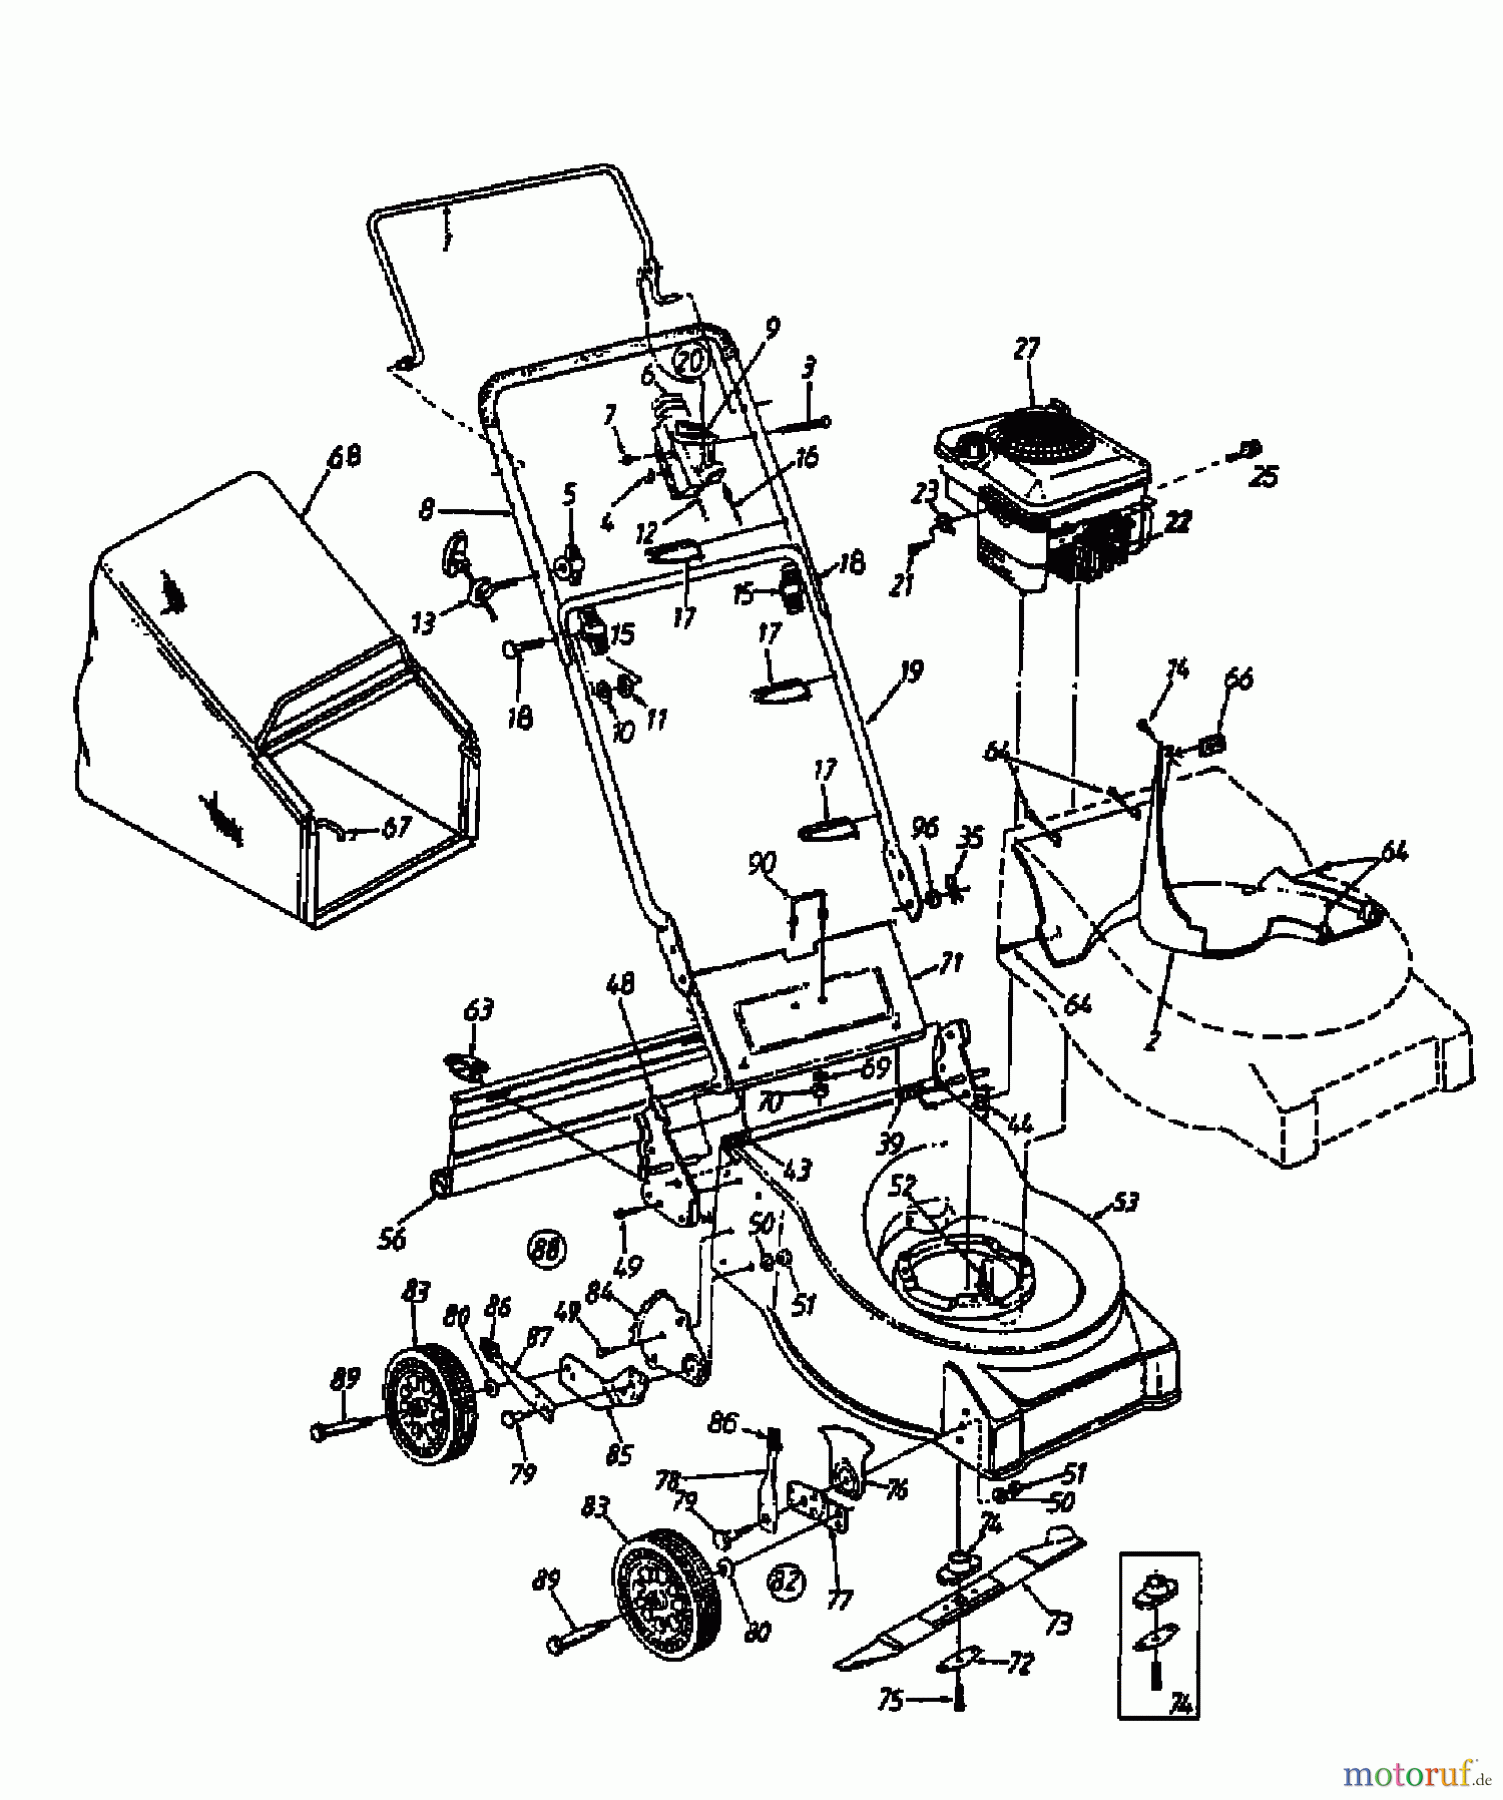  Lawnflite Petrol mower 383 P 11A-662A611  (1998) Basic machine